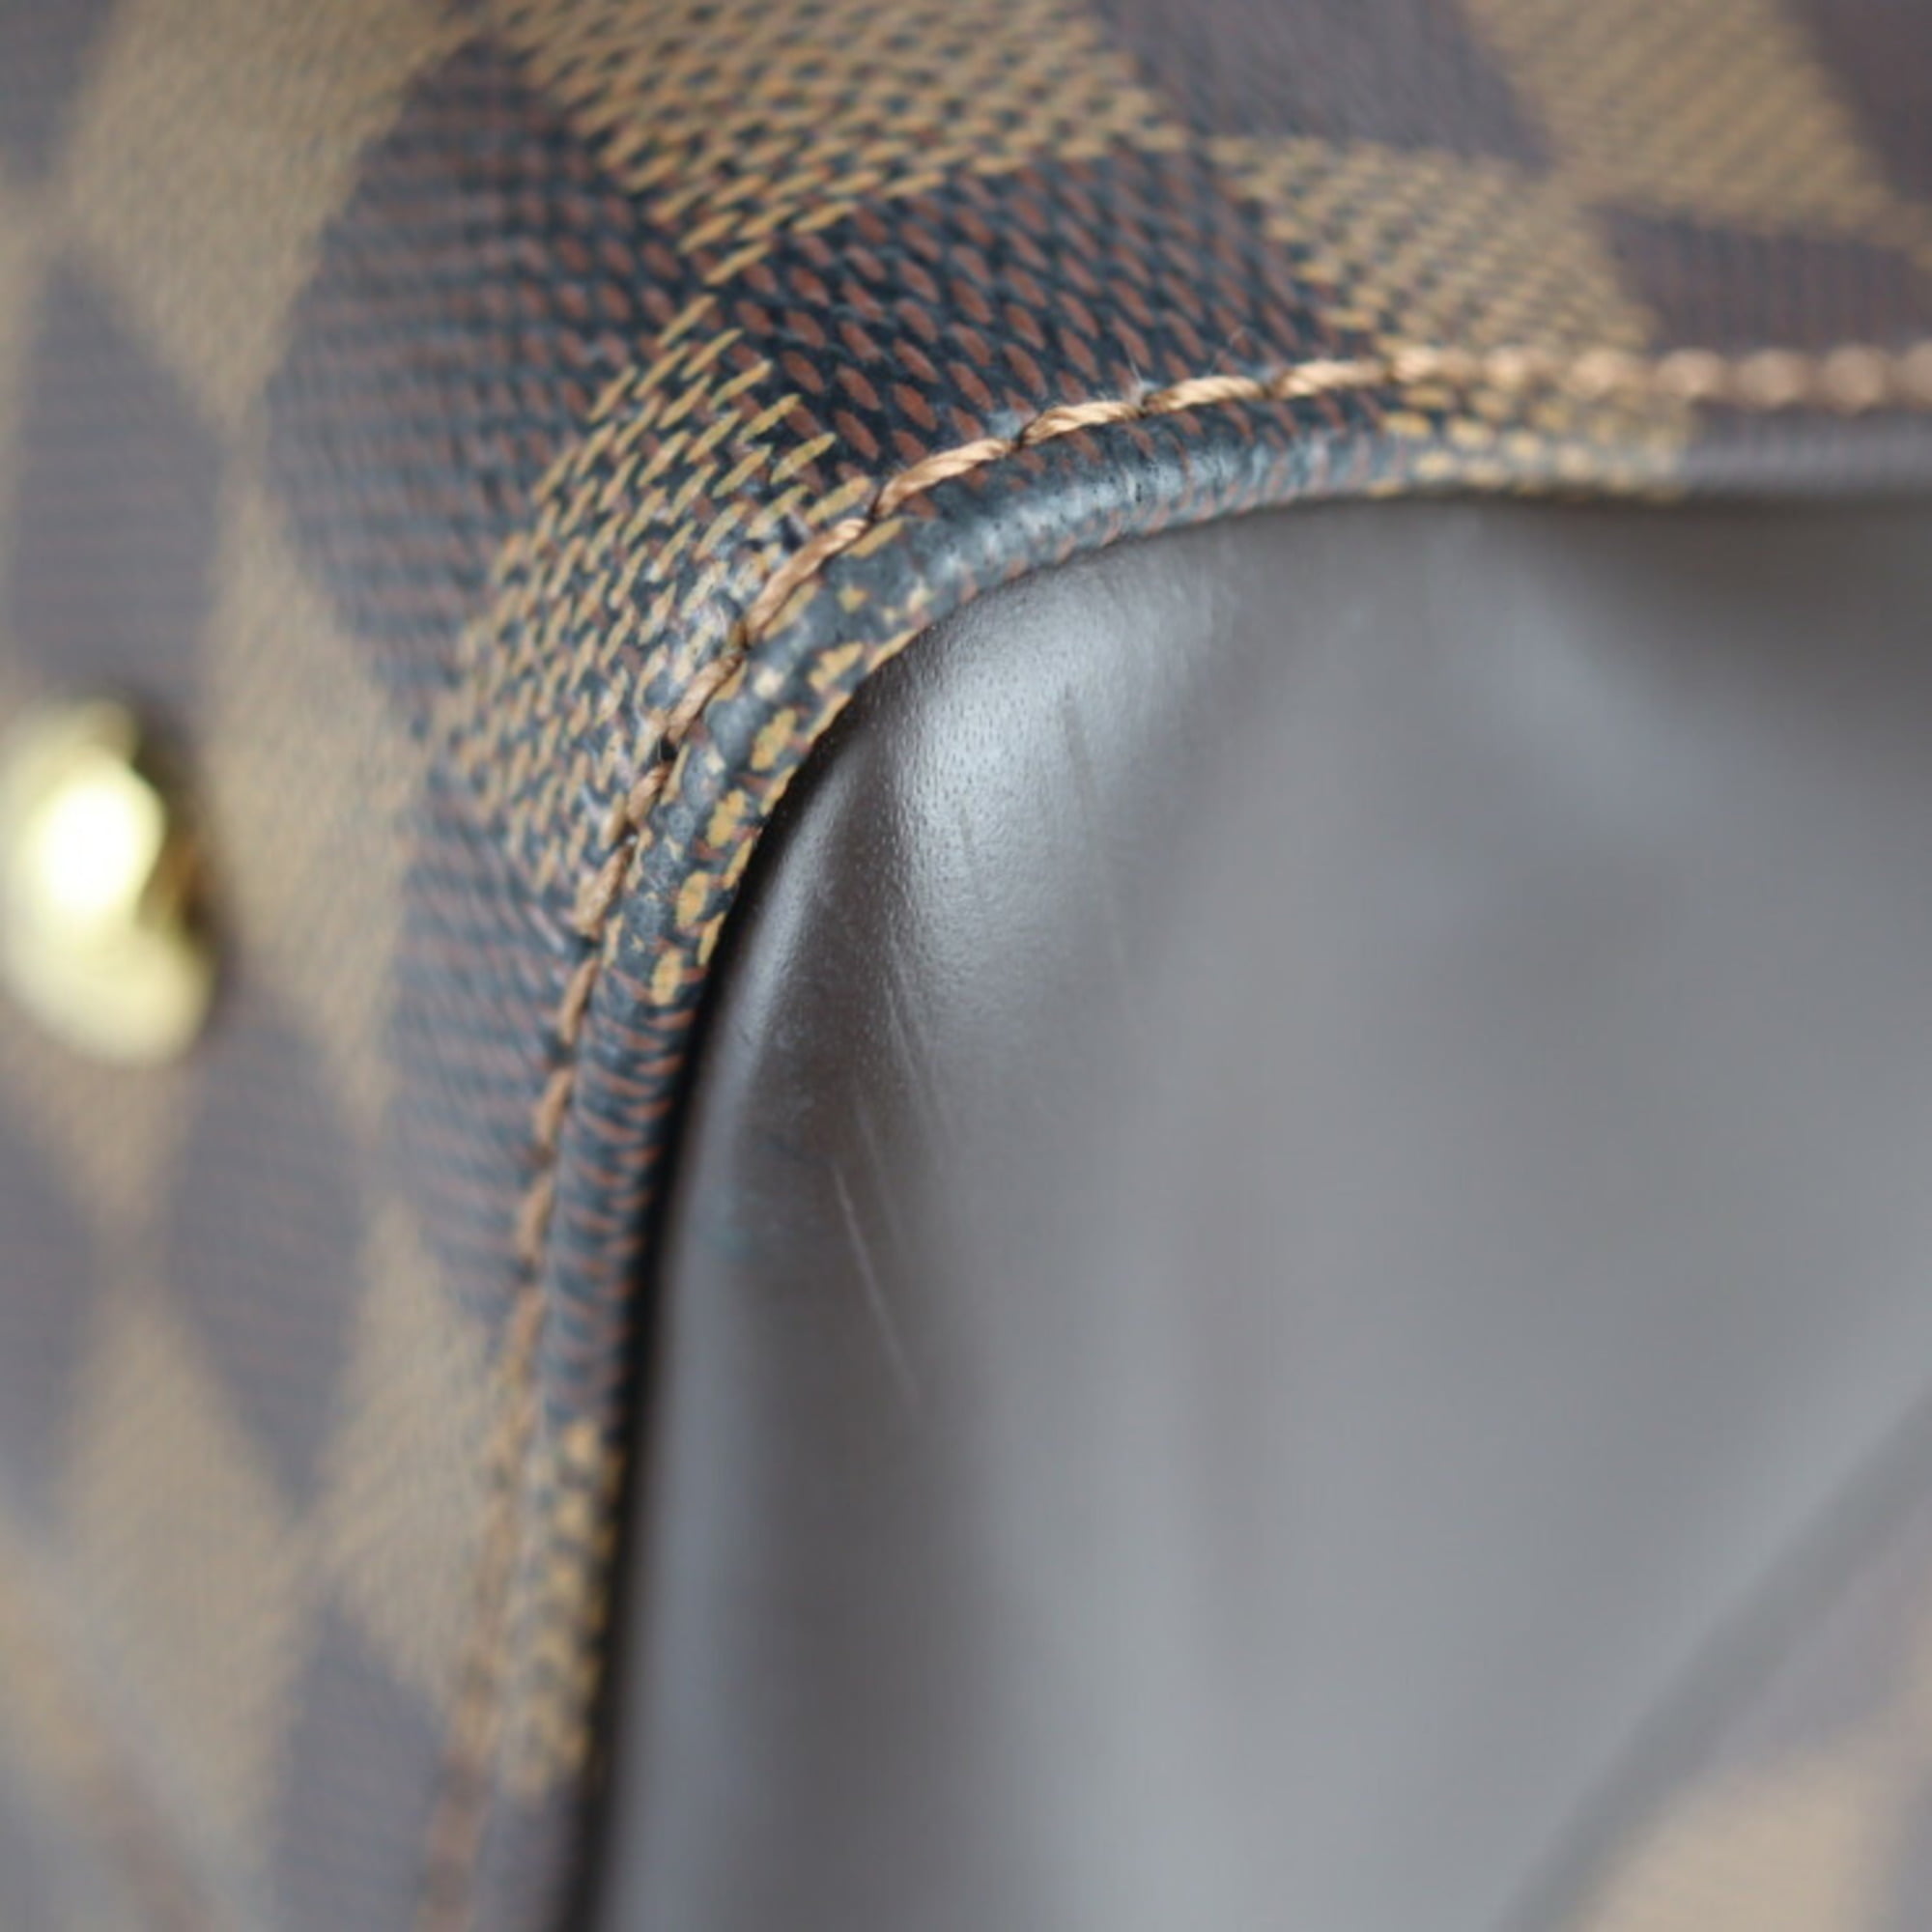 Louis Vuitton Kensington bowling handbag N41505 Damier canvas leather